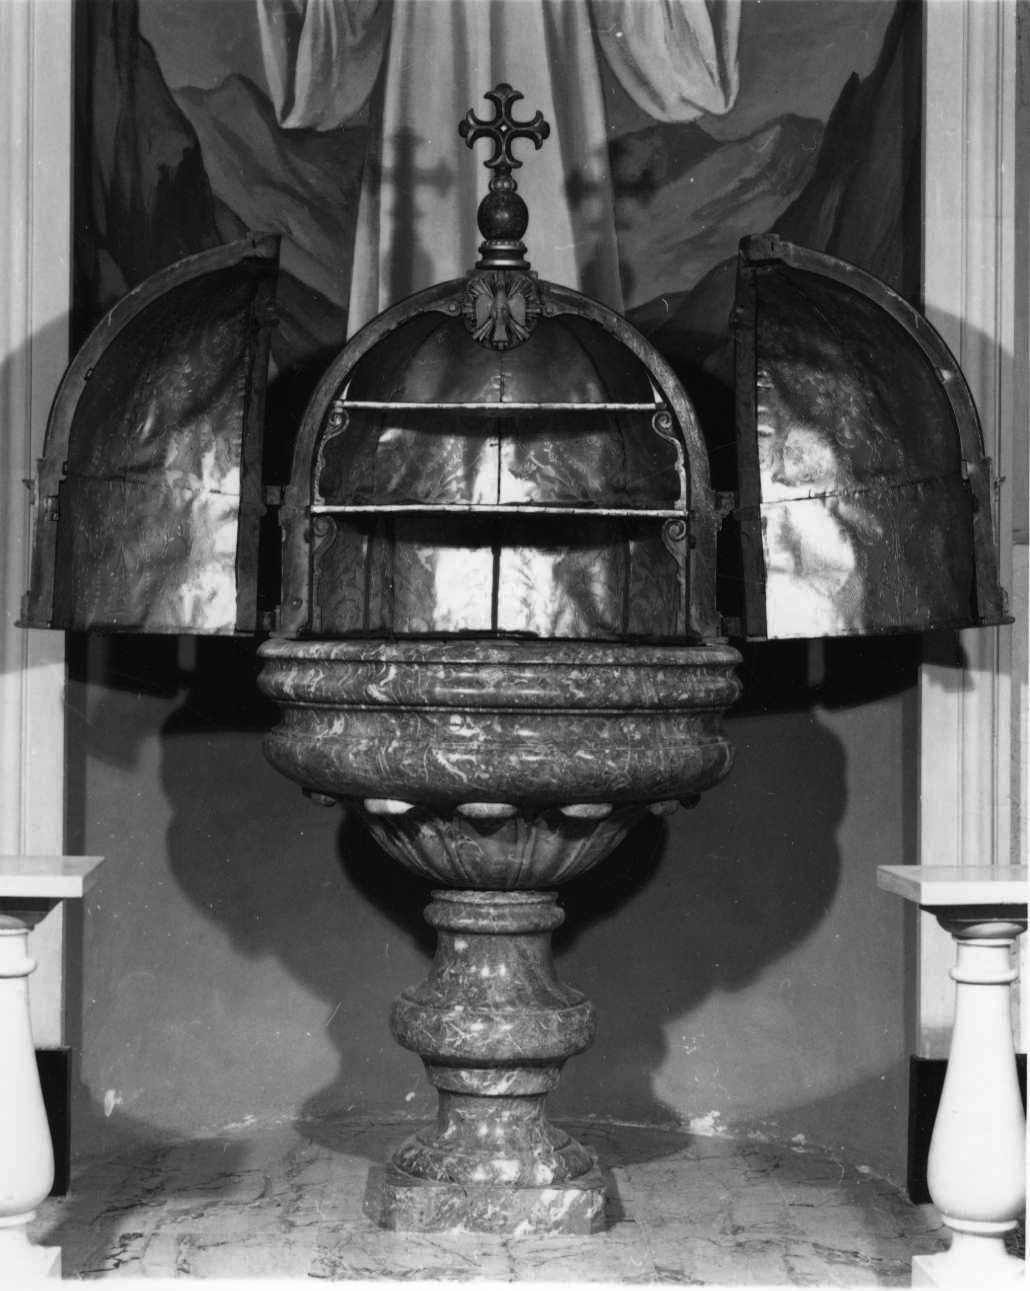 coperchio del fonte battesimale, elemento d'insieme - bottega astigiana (terzo quarto sec. XIX)